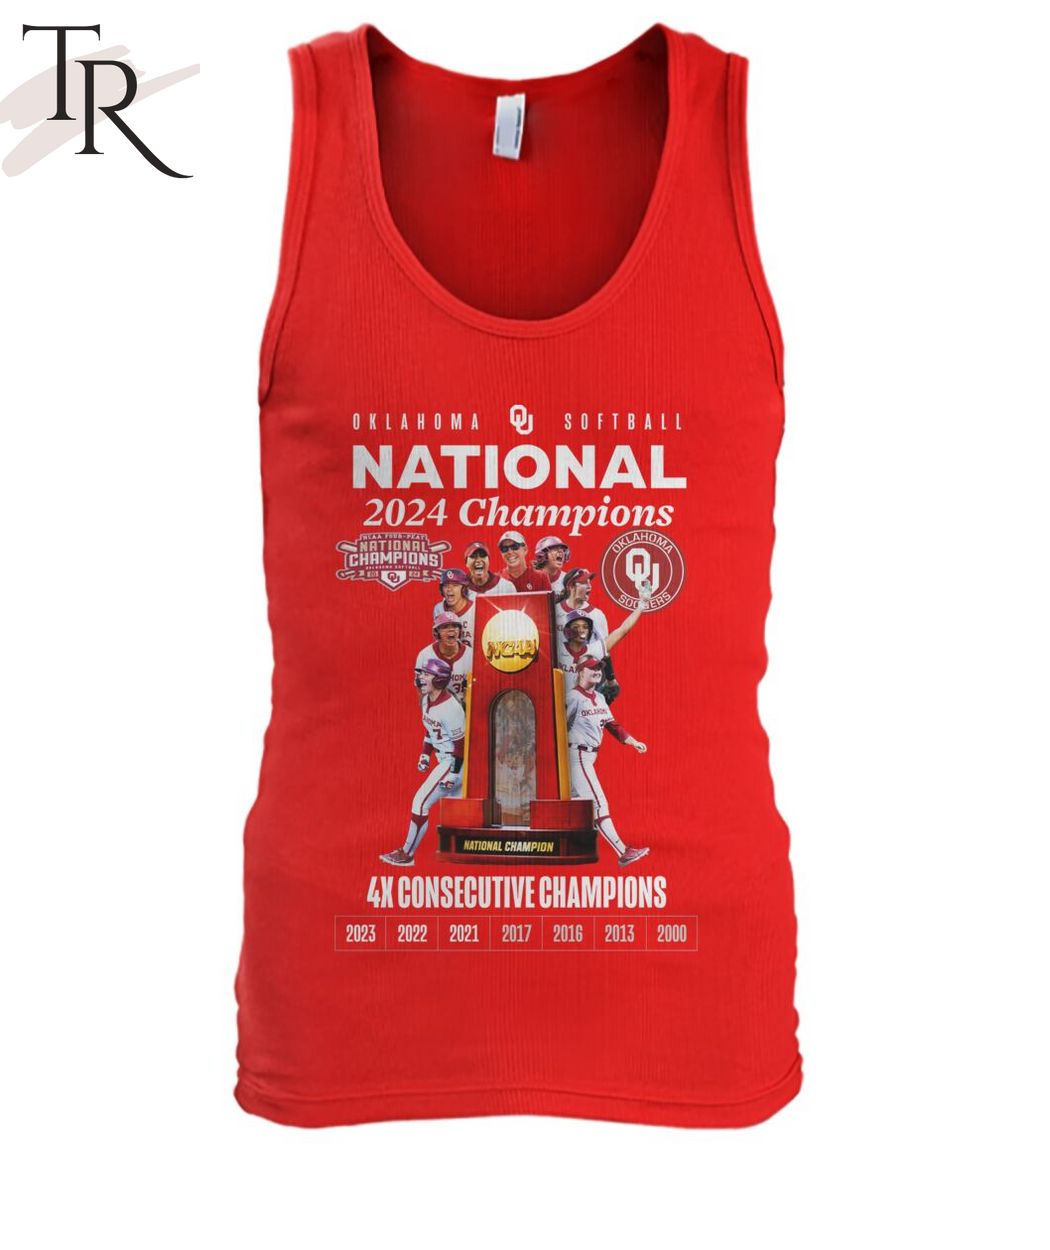 Oklahoma Softball National 2024 4x Consecutive Champions T-Shirt